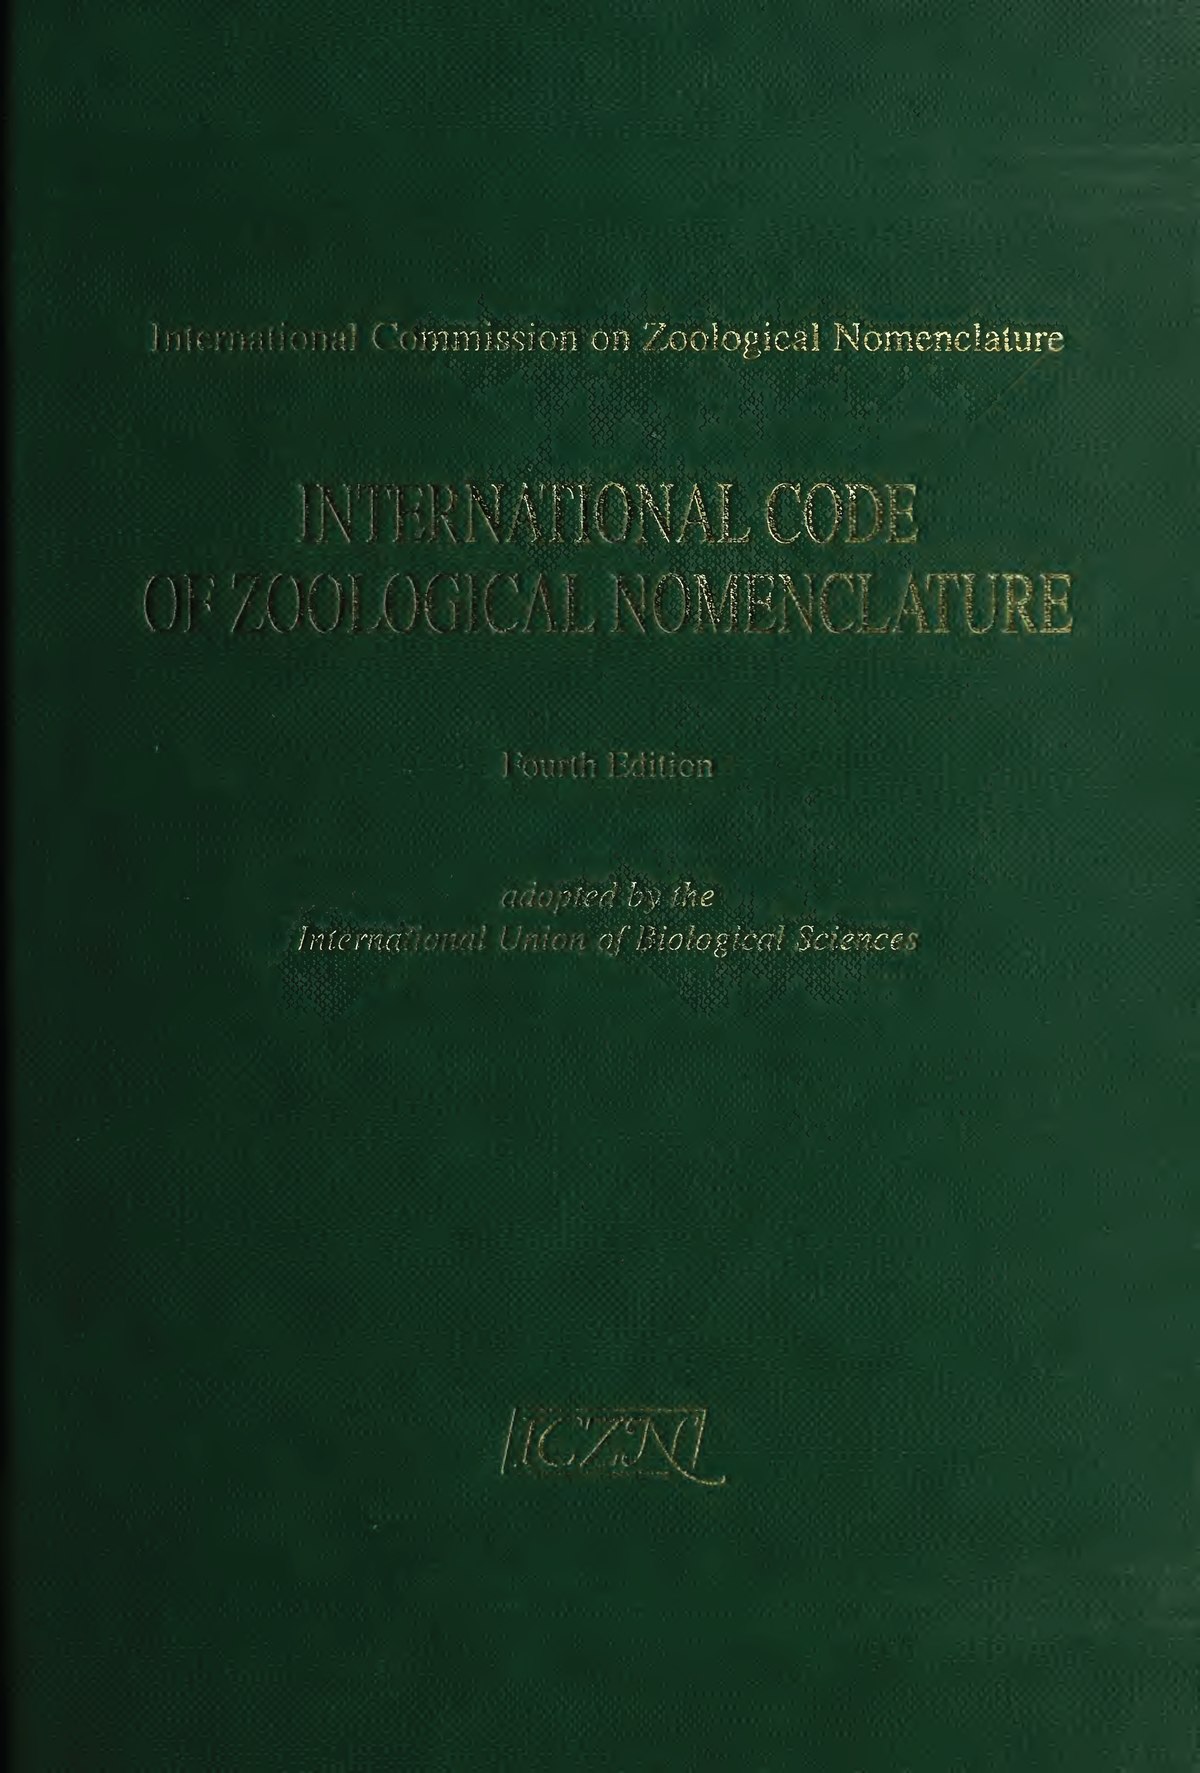 International Code of Zoological Nomenclature - Wikipedia